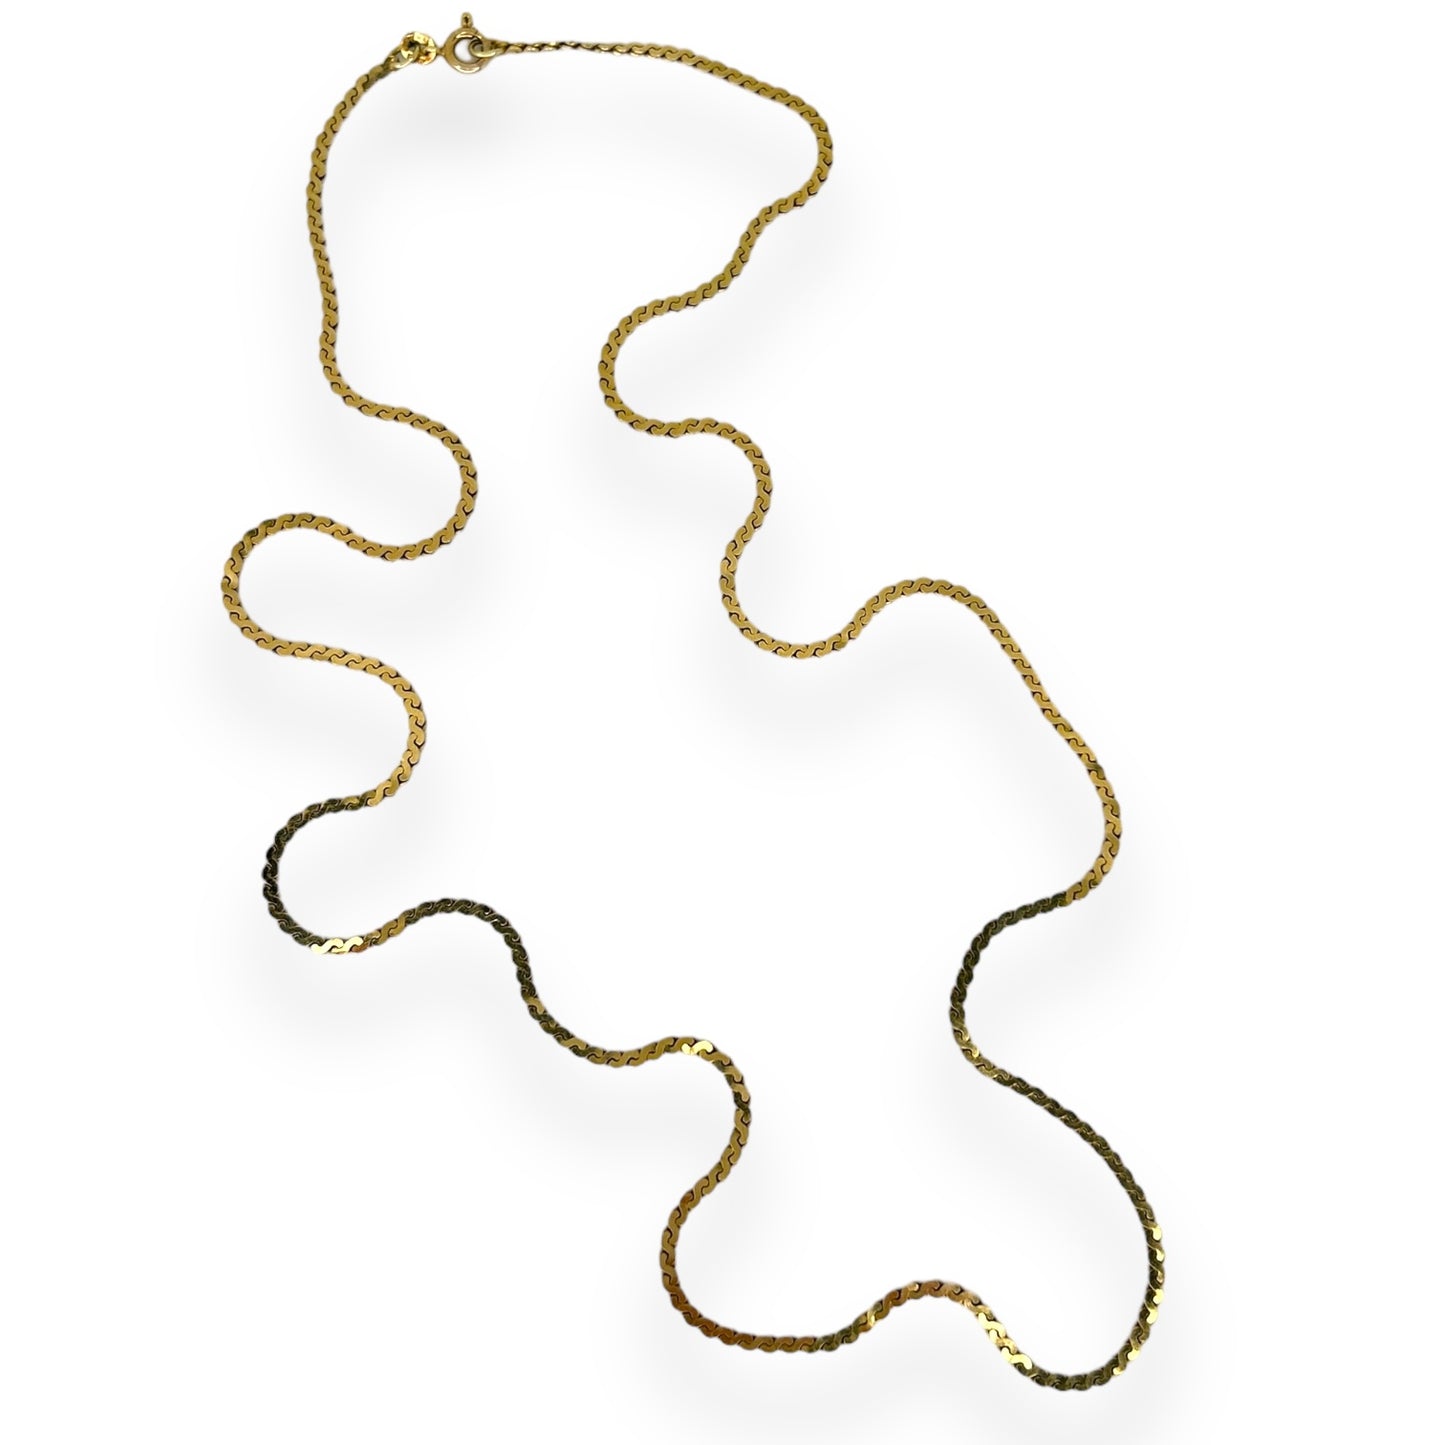 Vintage 14K Wavy Link Gold Chain